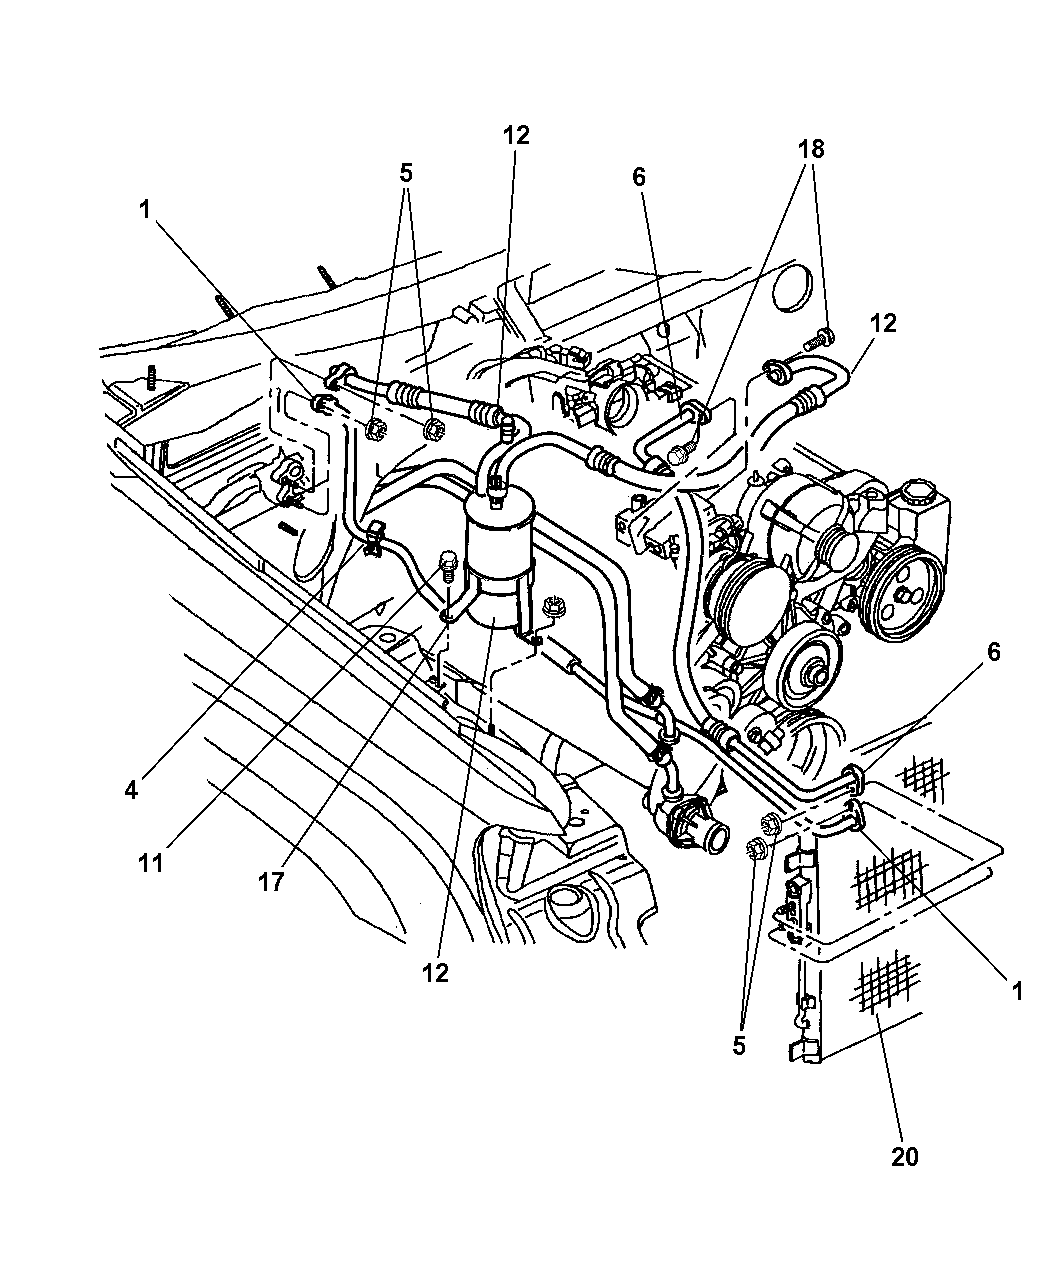 Wiring Diagram: 32 2001 Jeep Grand Cherokee Parts Diagram